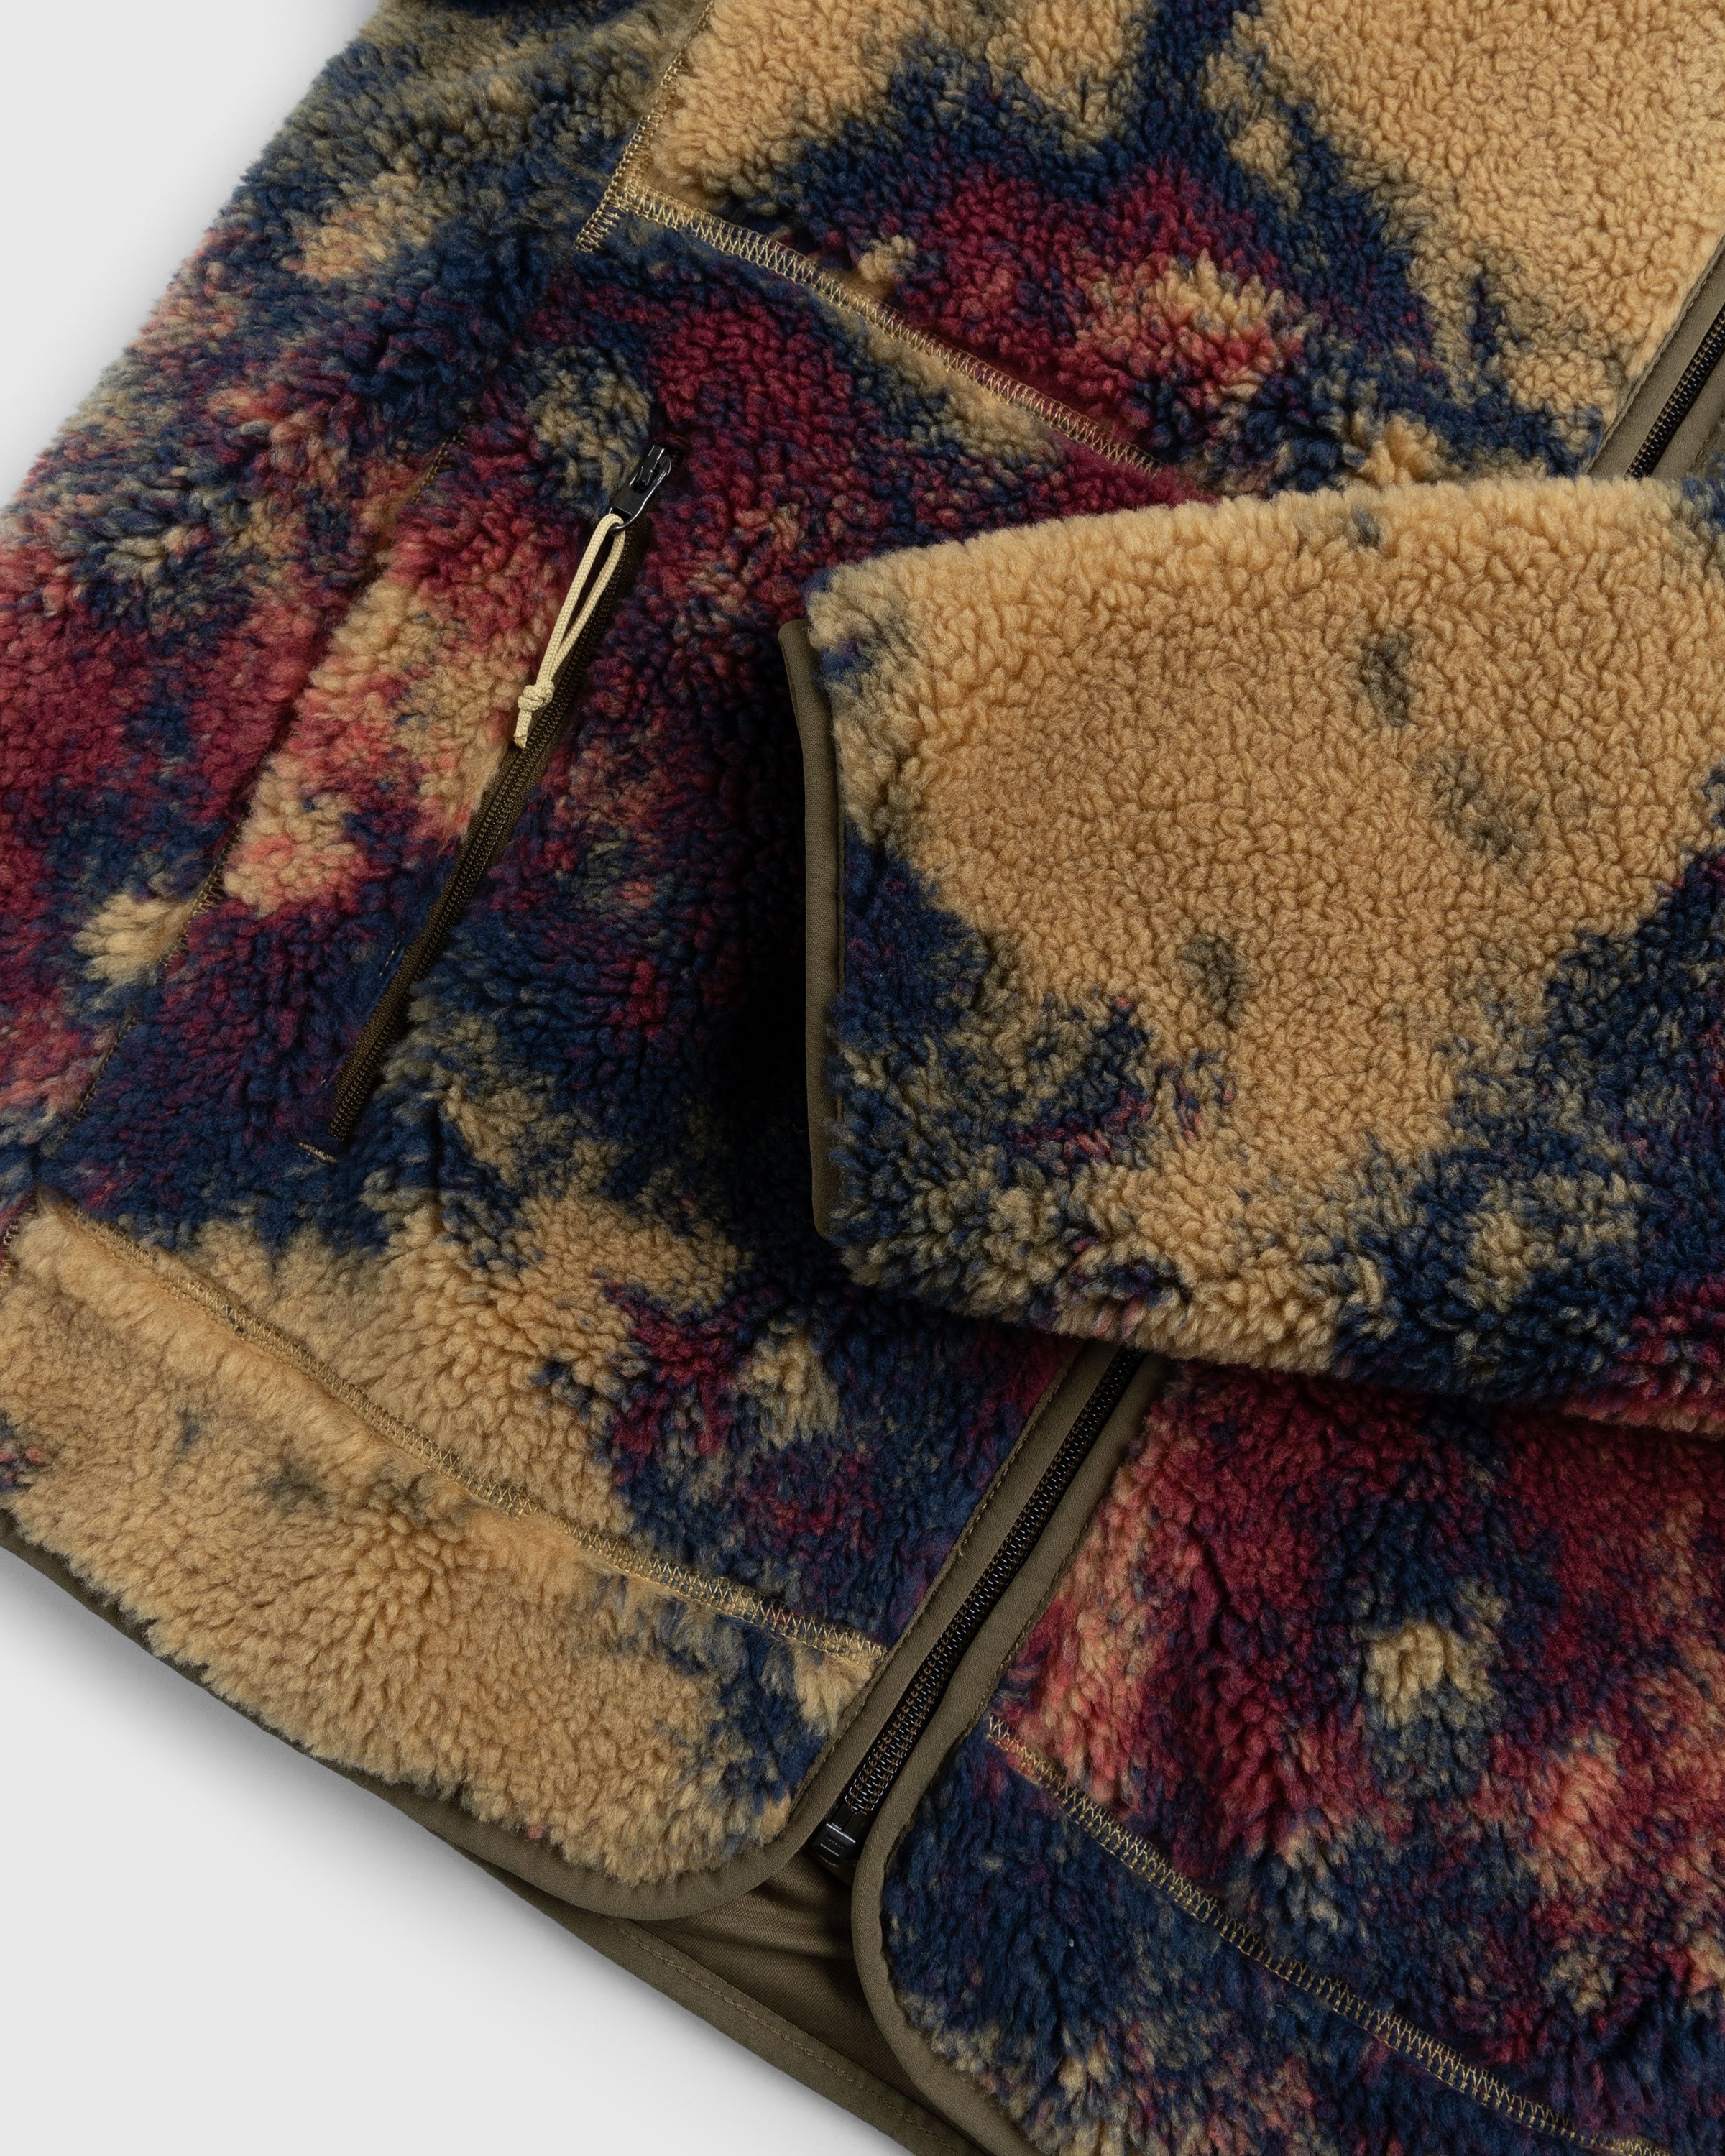 The North Face - Jacquard Extreme Pile Full-Zip Jacket Antelope Tan/Ice Dye Print - Clothing - Multi - Image 5